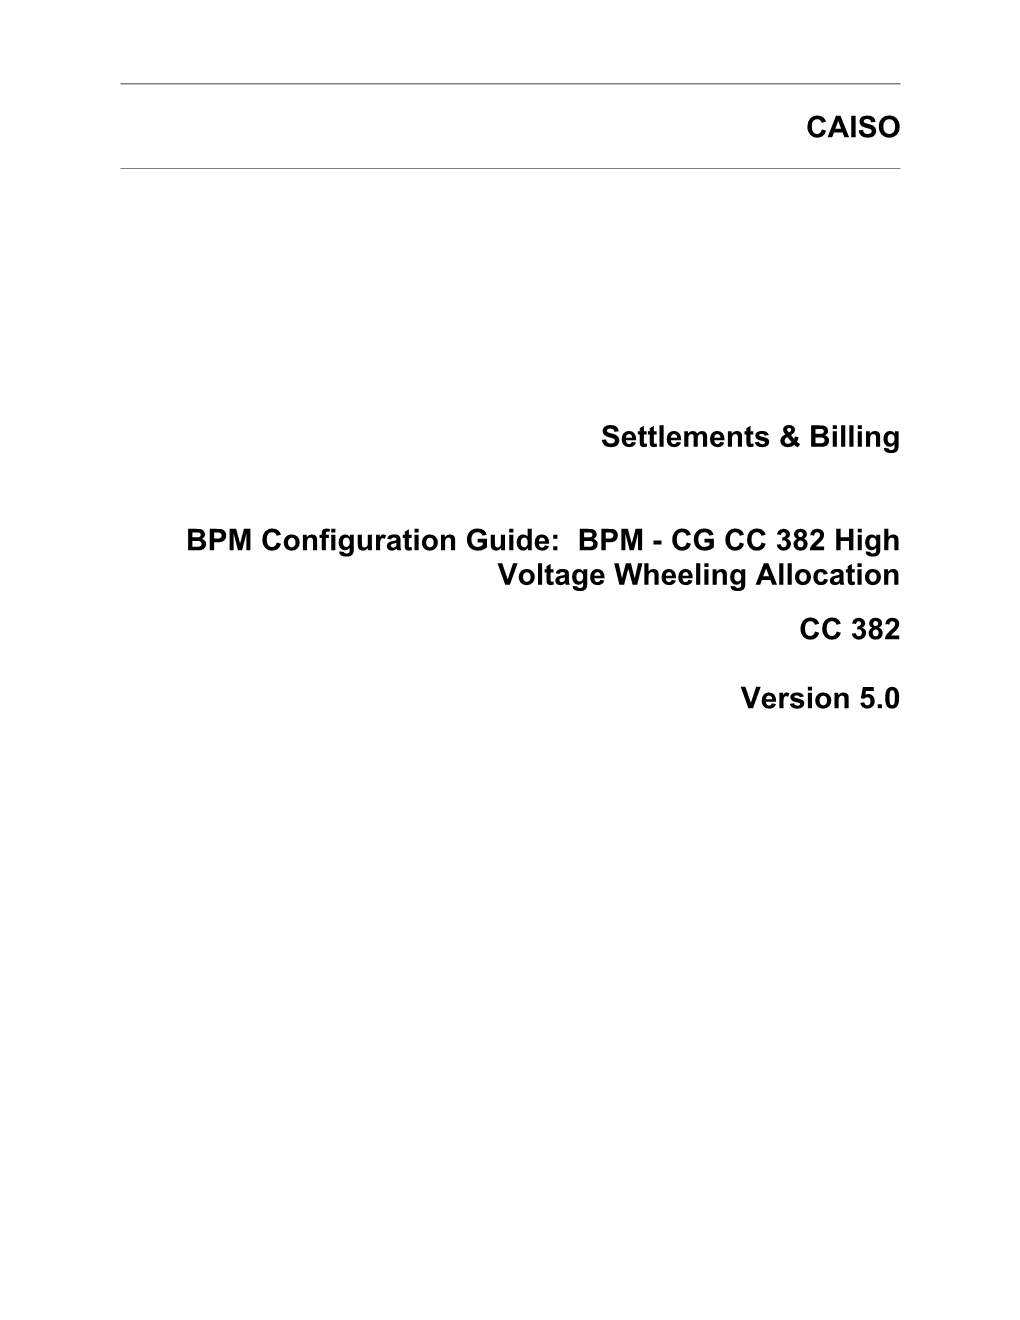 BPM - CG CC 382 High Voltage Wheeling Allocation